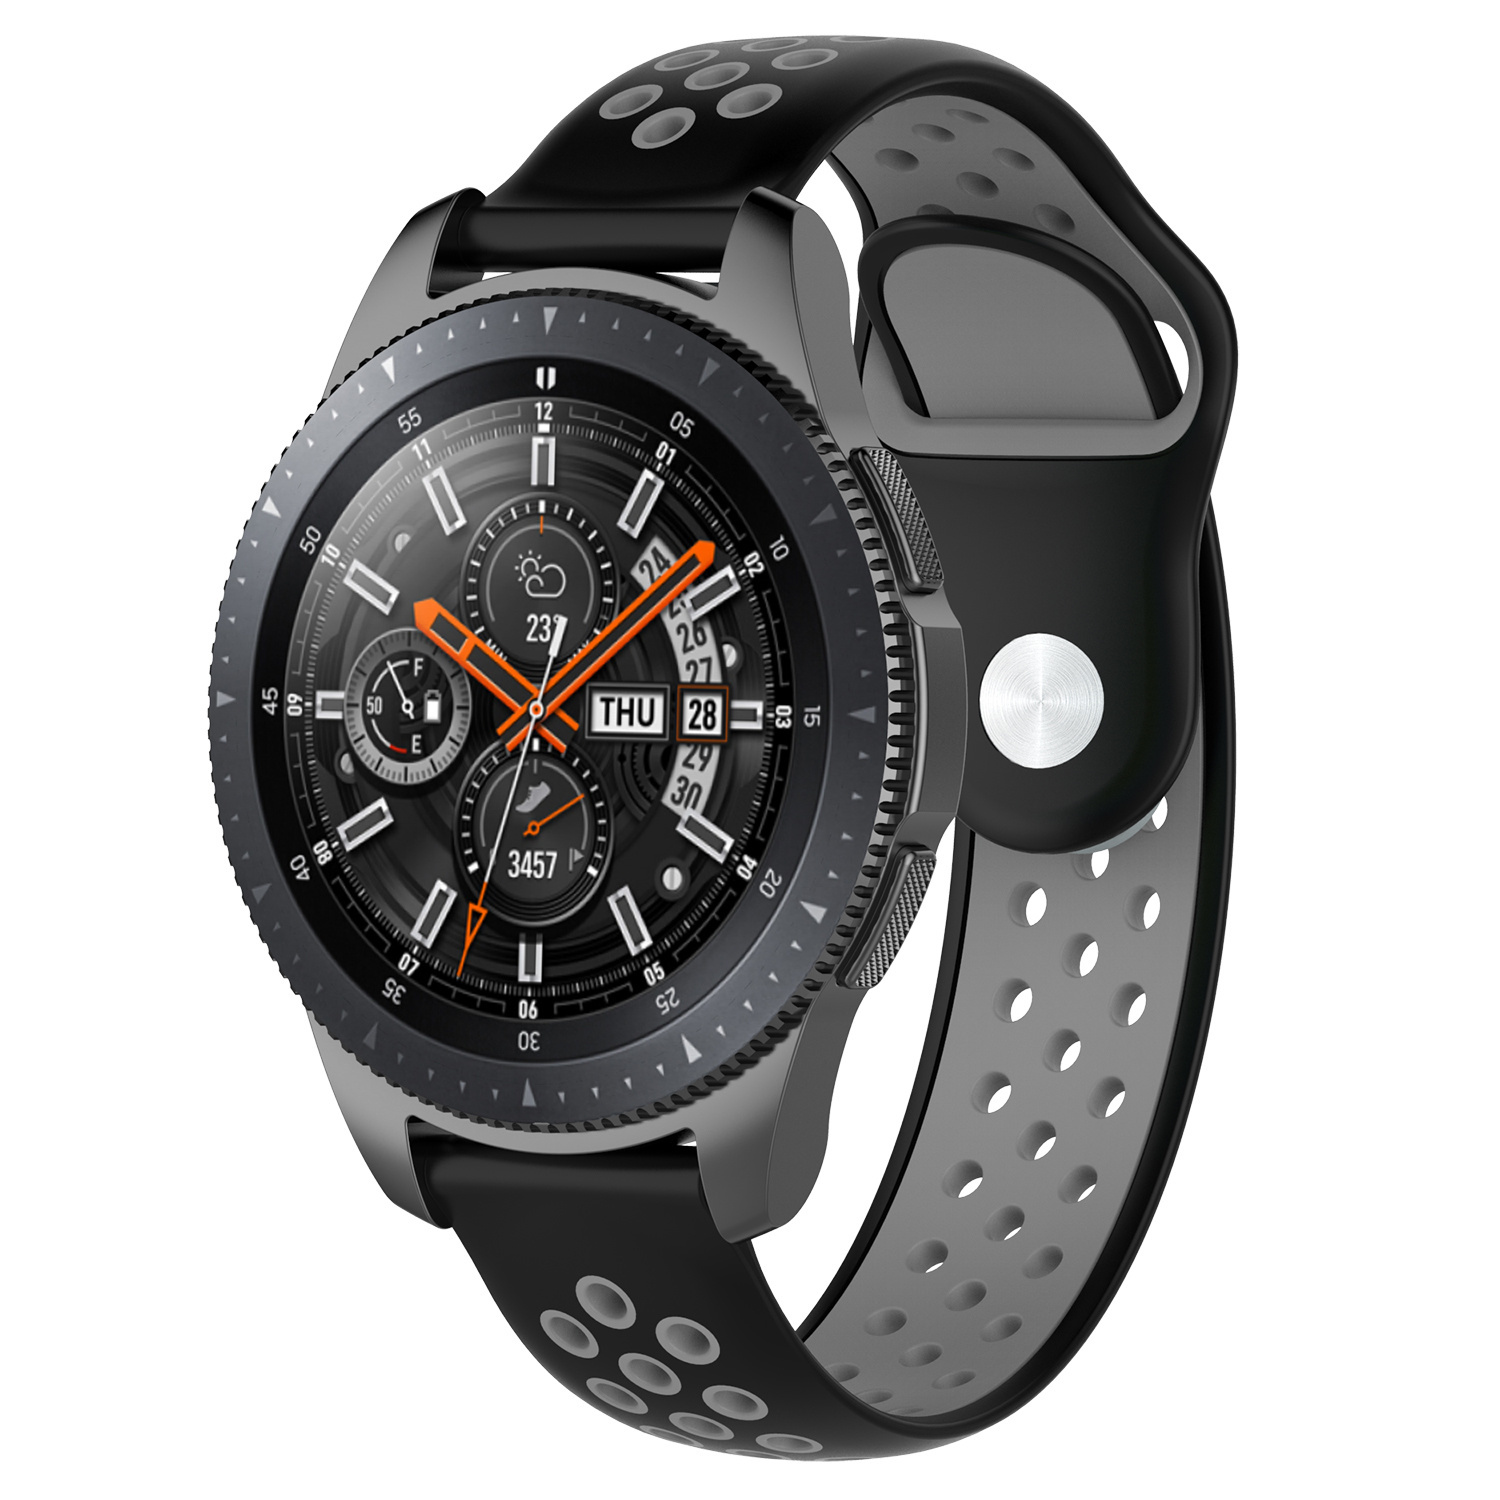 Samsung Galaxy Watch dupla sport szíj - fekete szürke